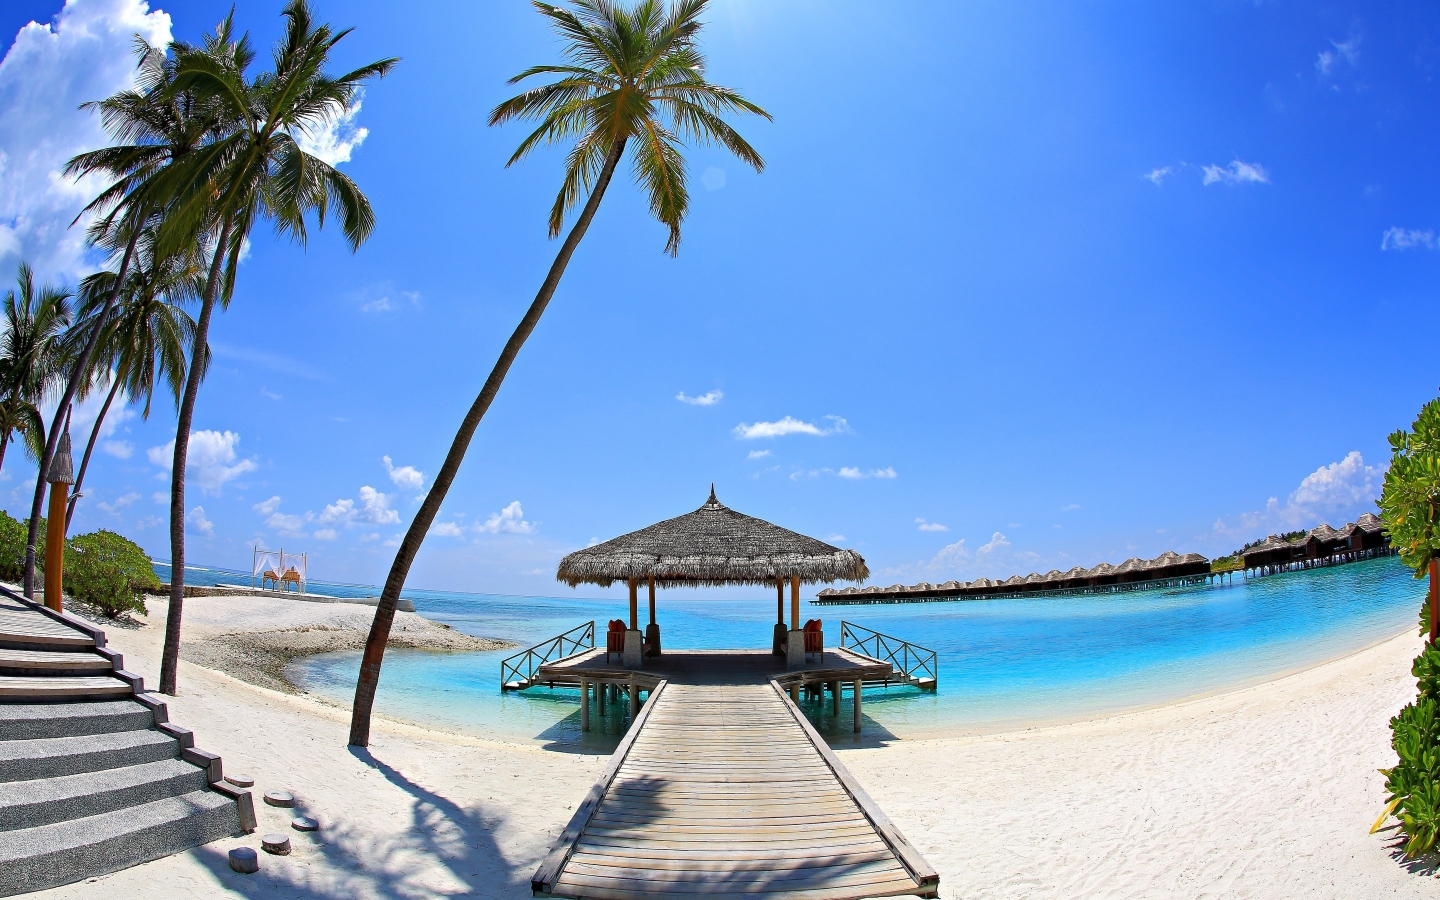 Sunny Palm Beach Corner  for 1440 x 900 widescreen resolution